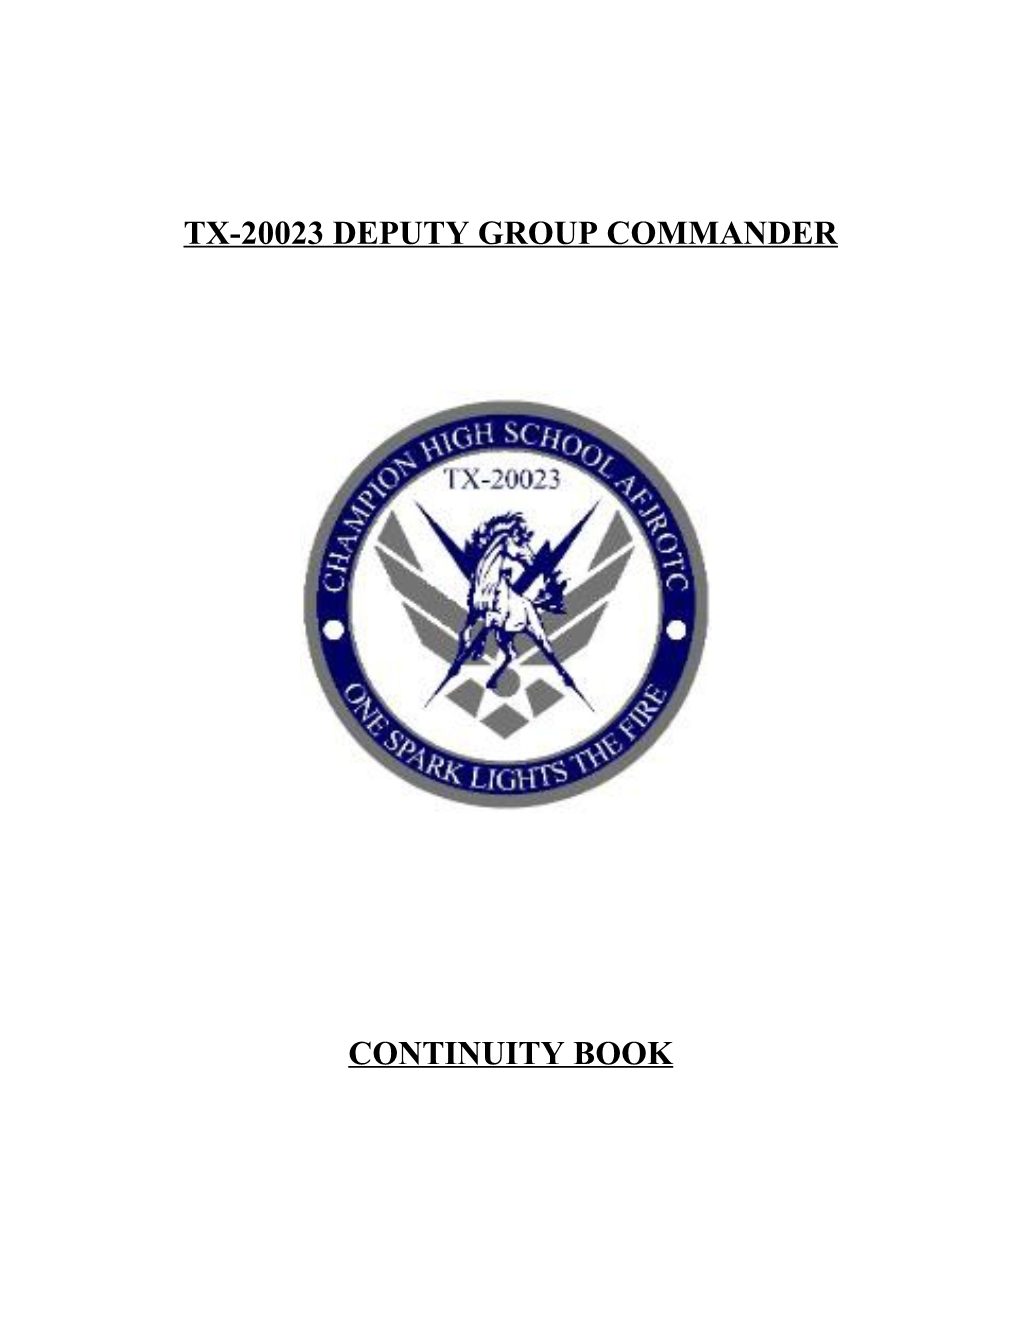 Deputy Corps Commander